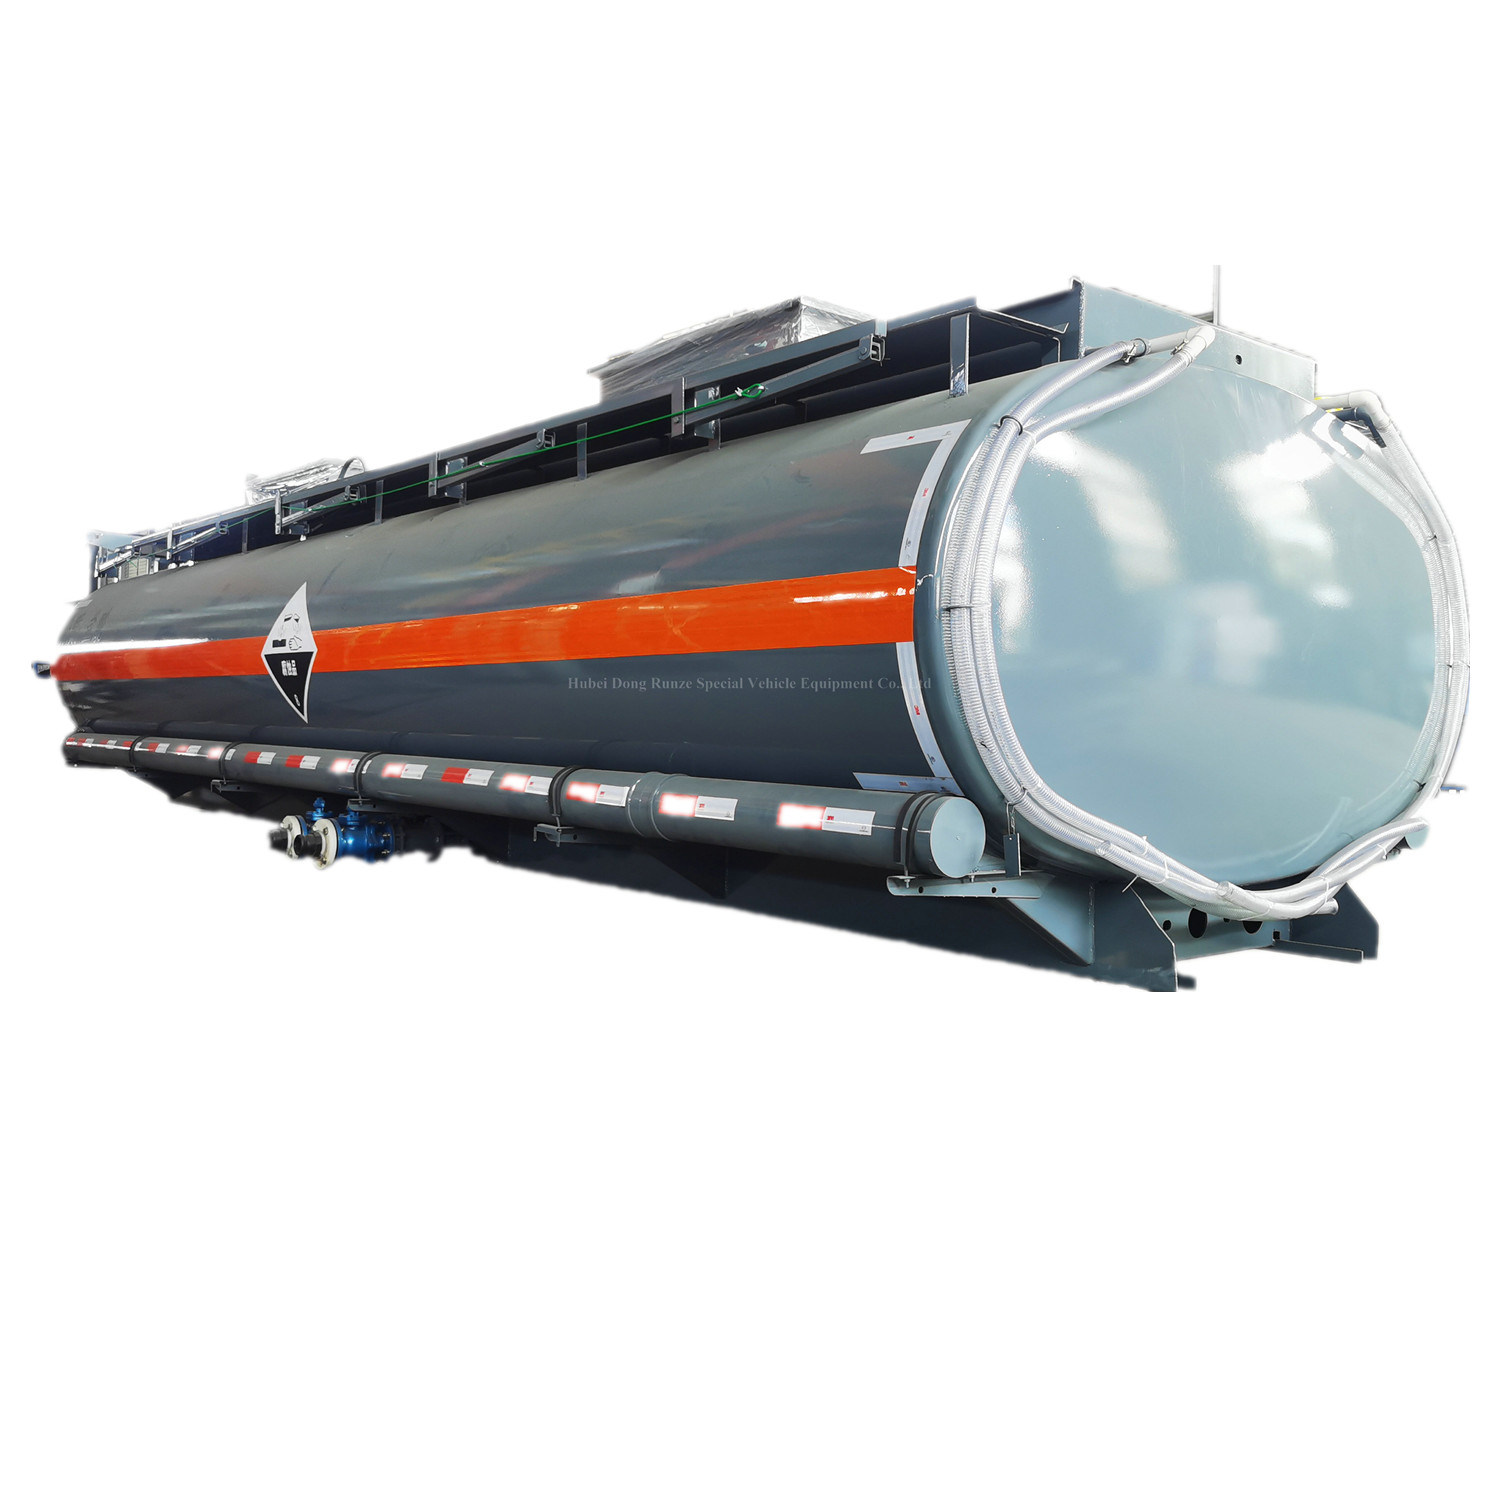  Elliptic 10m3 Lined PE Hydrochloric Acid Tank, Sodium Hypochlorite Tank Body